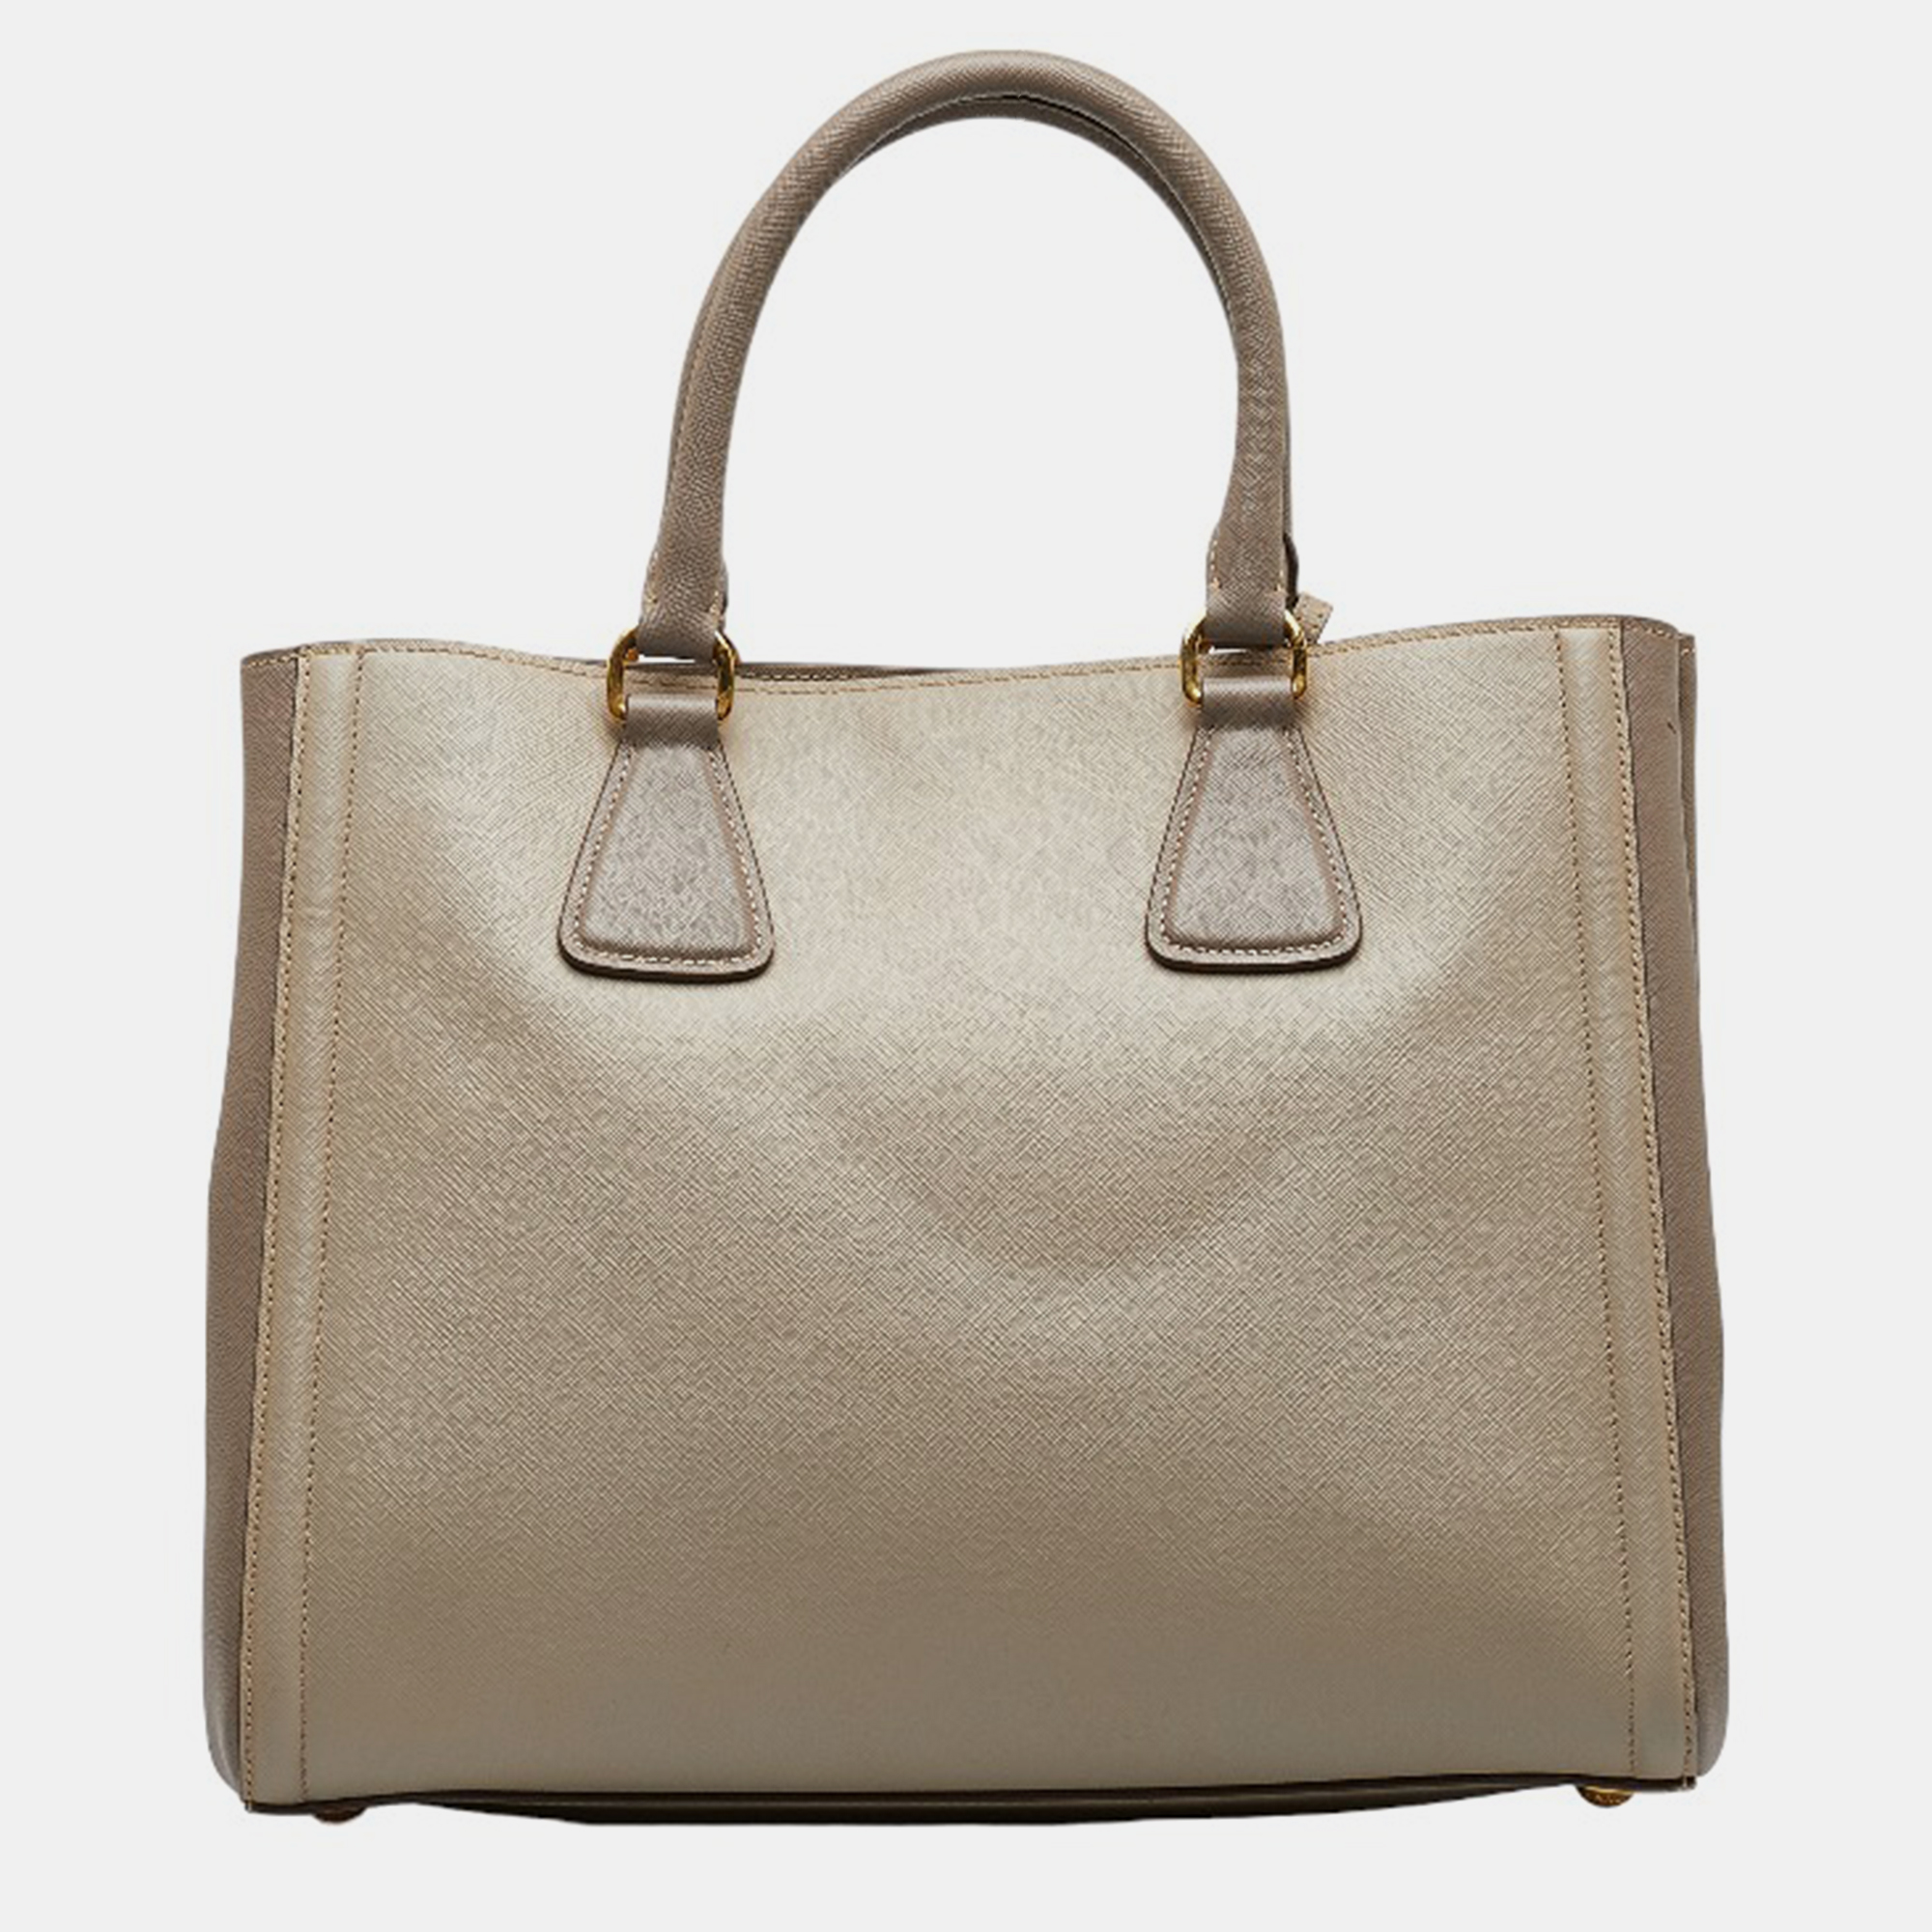 Prada Brown Saffiano Leather Tote Bag